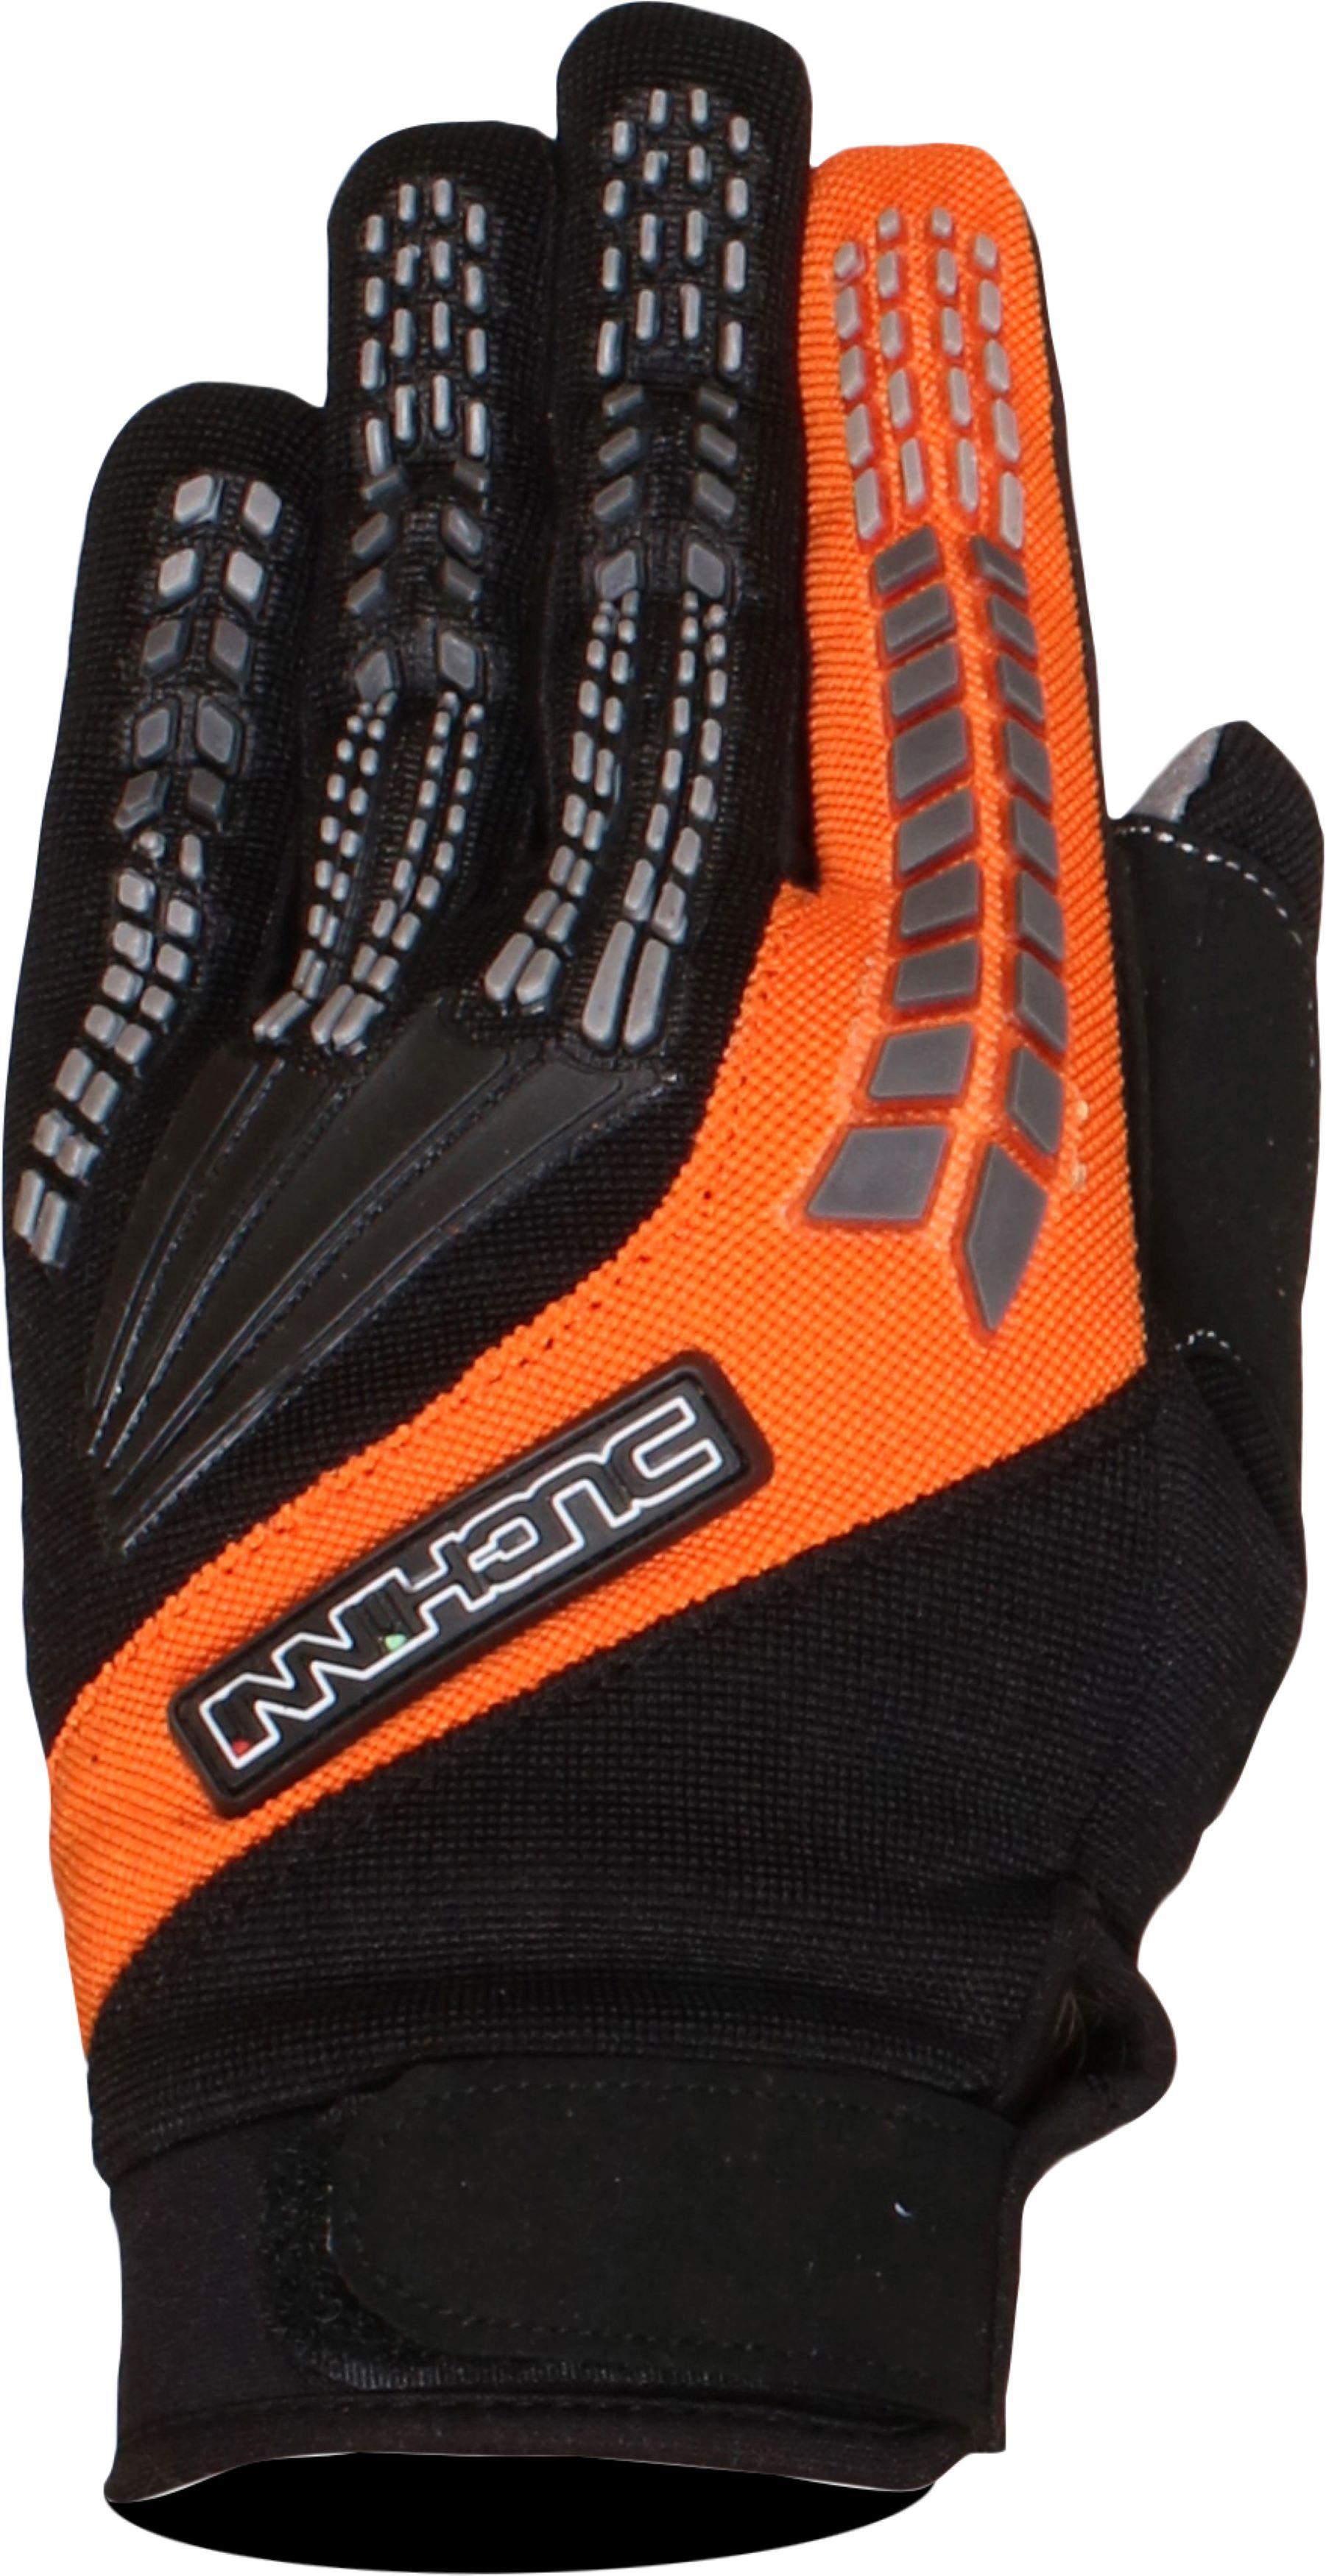 Duchinni Focus Motorcycle Gloves - Black And Orange, Xl